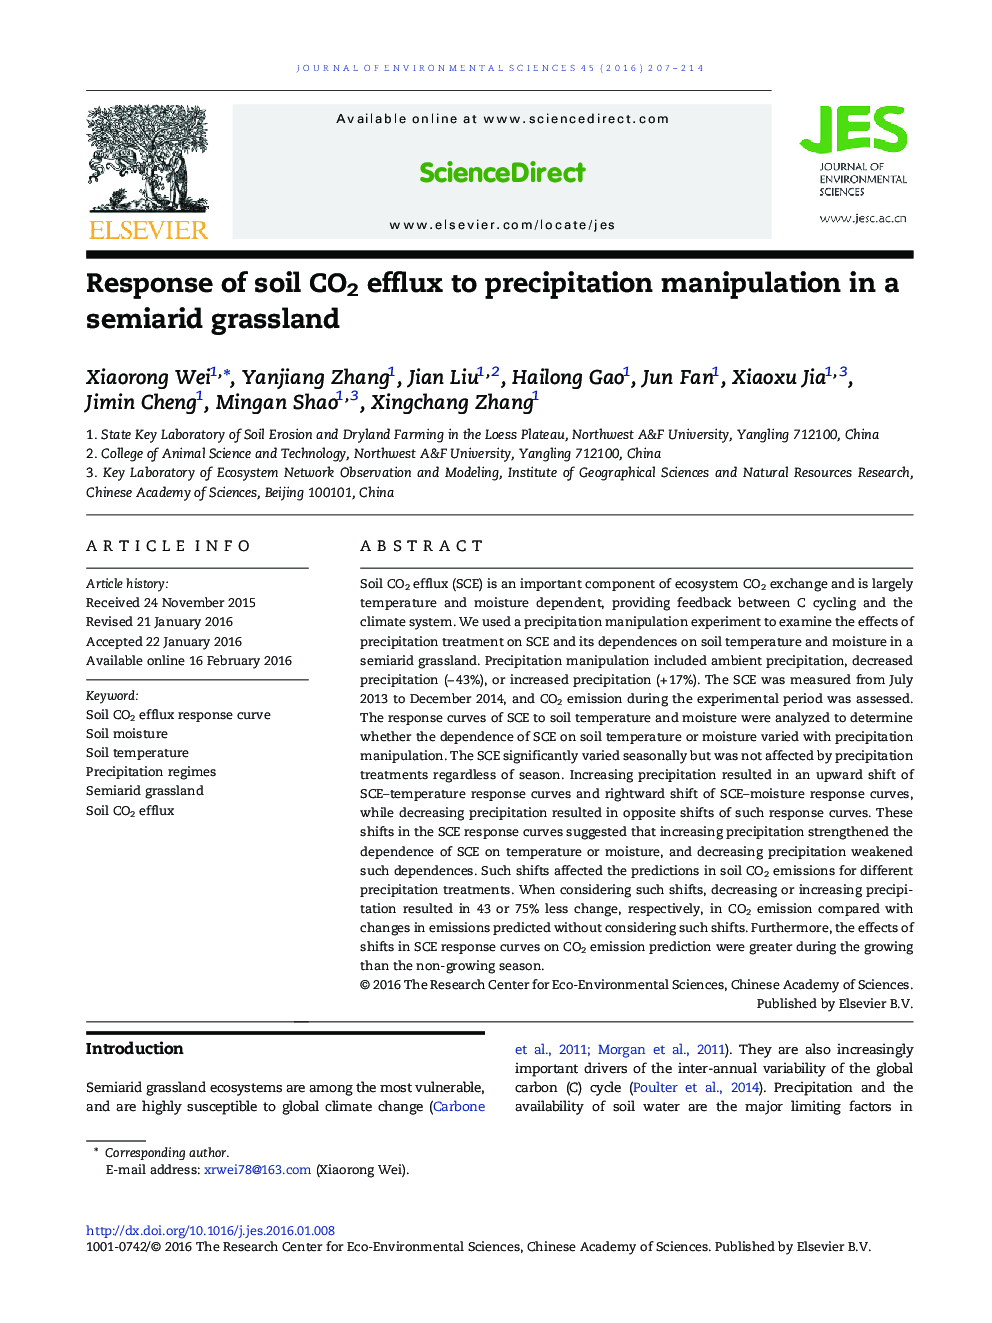 Response of soil CO2 efflux to precipitation manipulation in a semiarid grassland